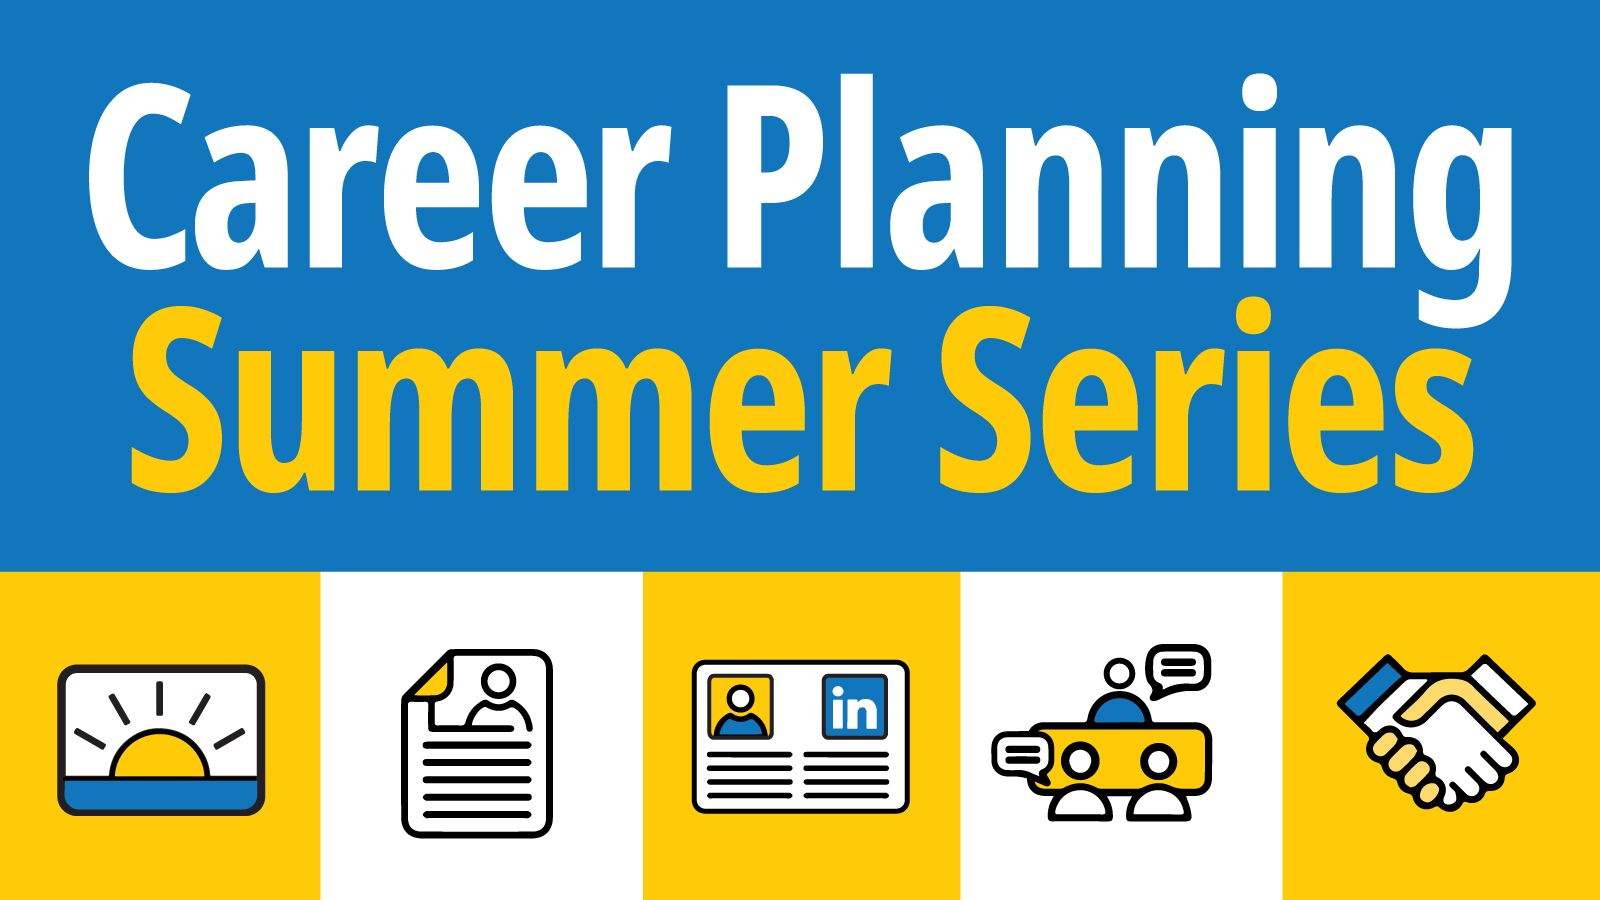 Image: Career Planning Summer Series banner for workshops offered by Career Development Services